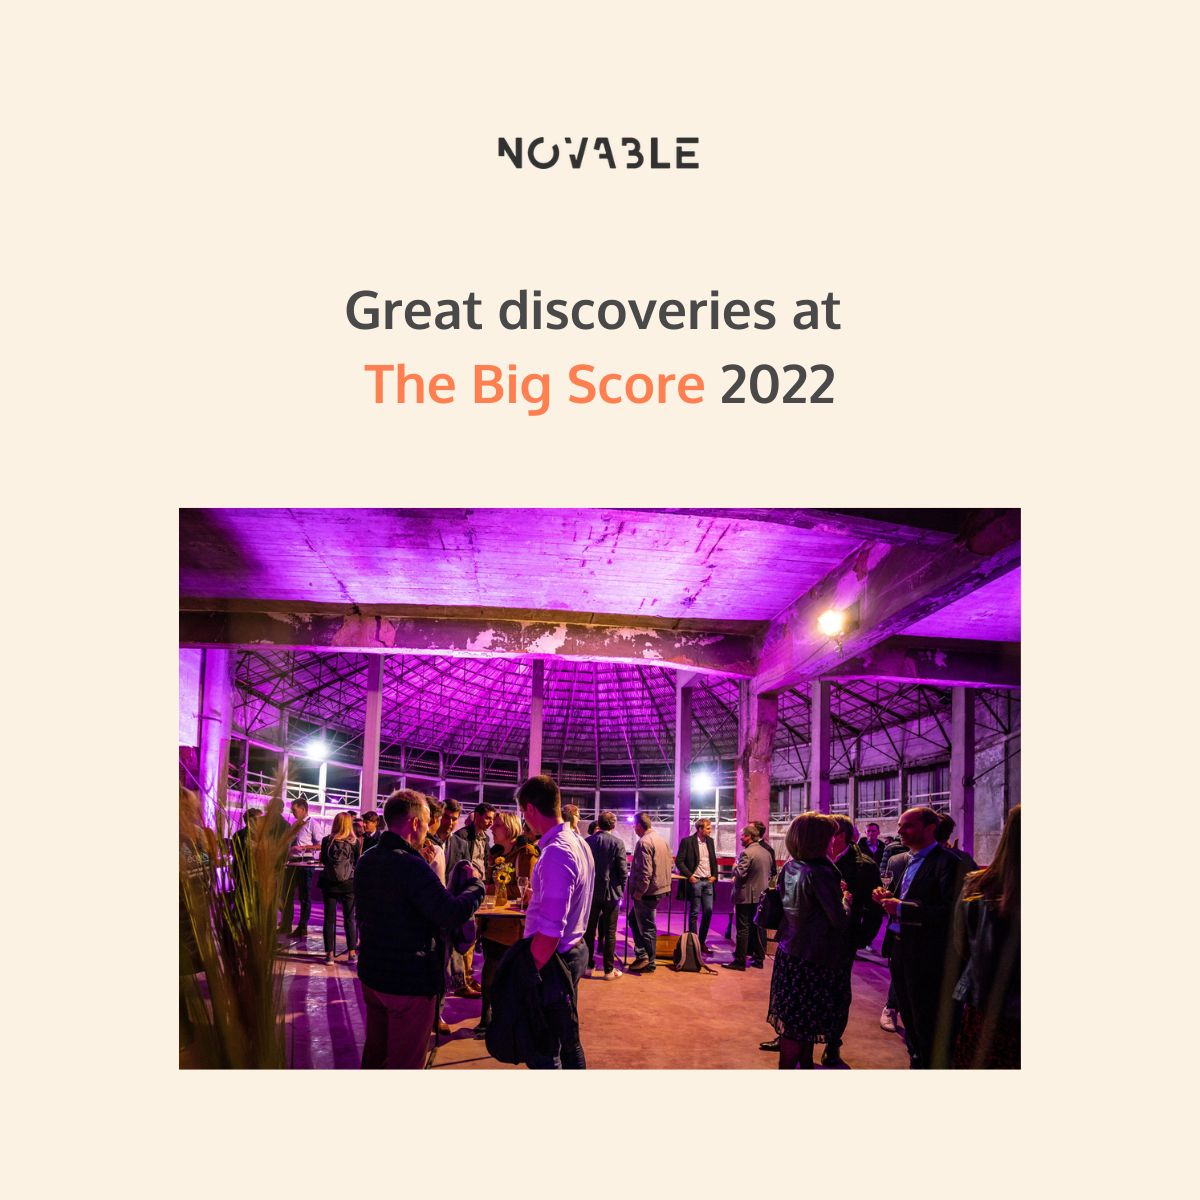 The Big Score 2022